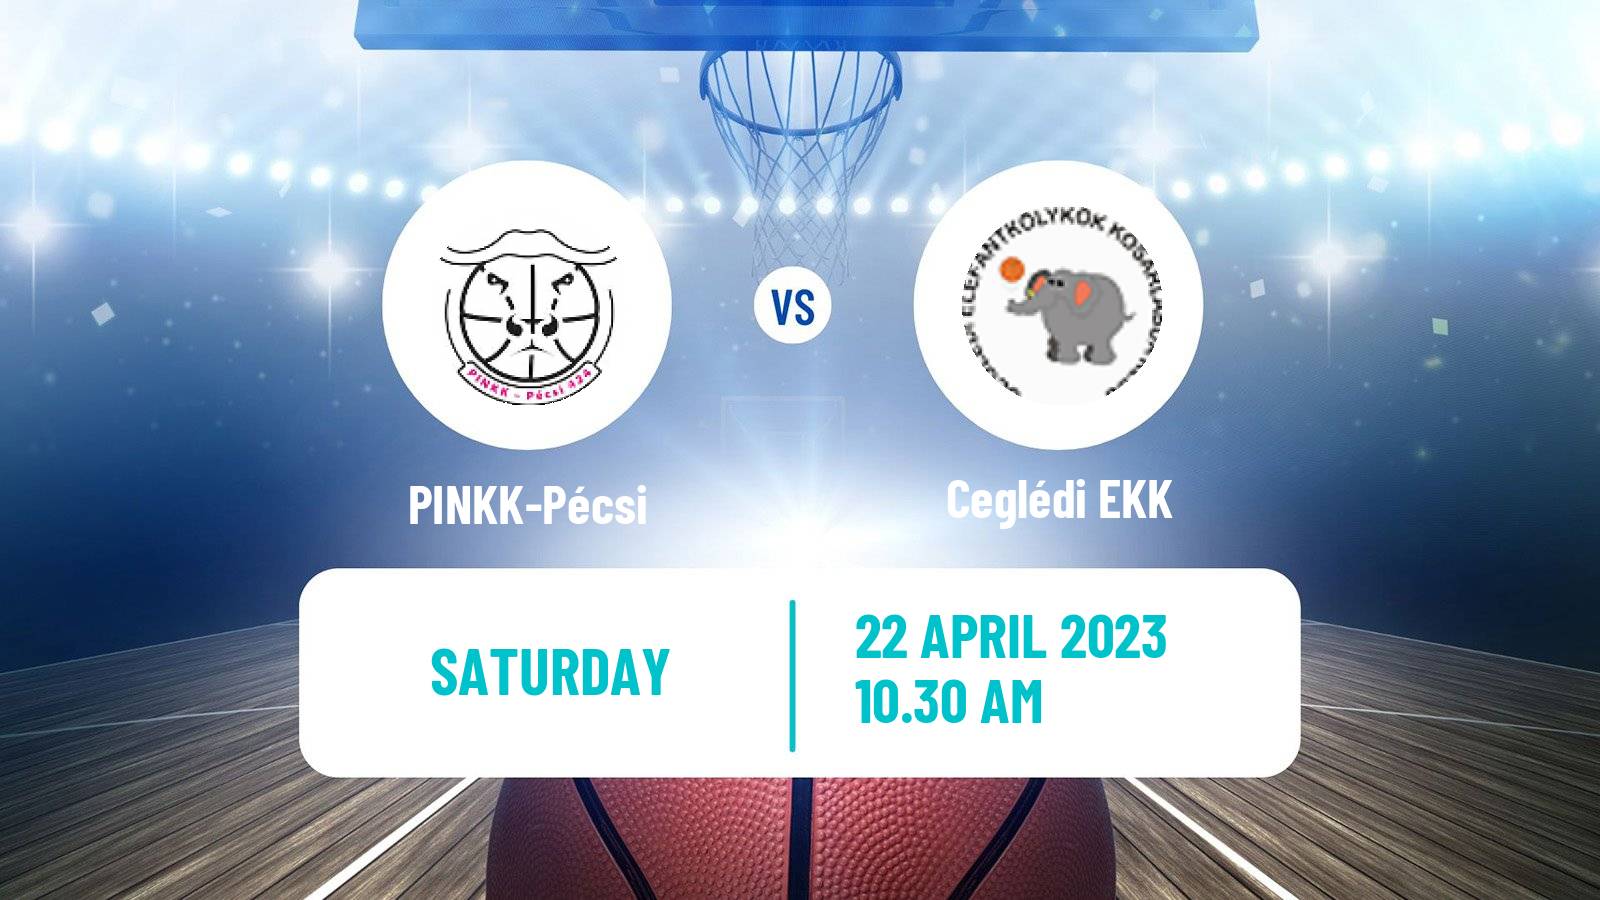 Basketball Hungarian NB I Basketball Women PINKK-Pécsi - Ceglédi EKK